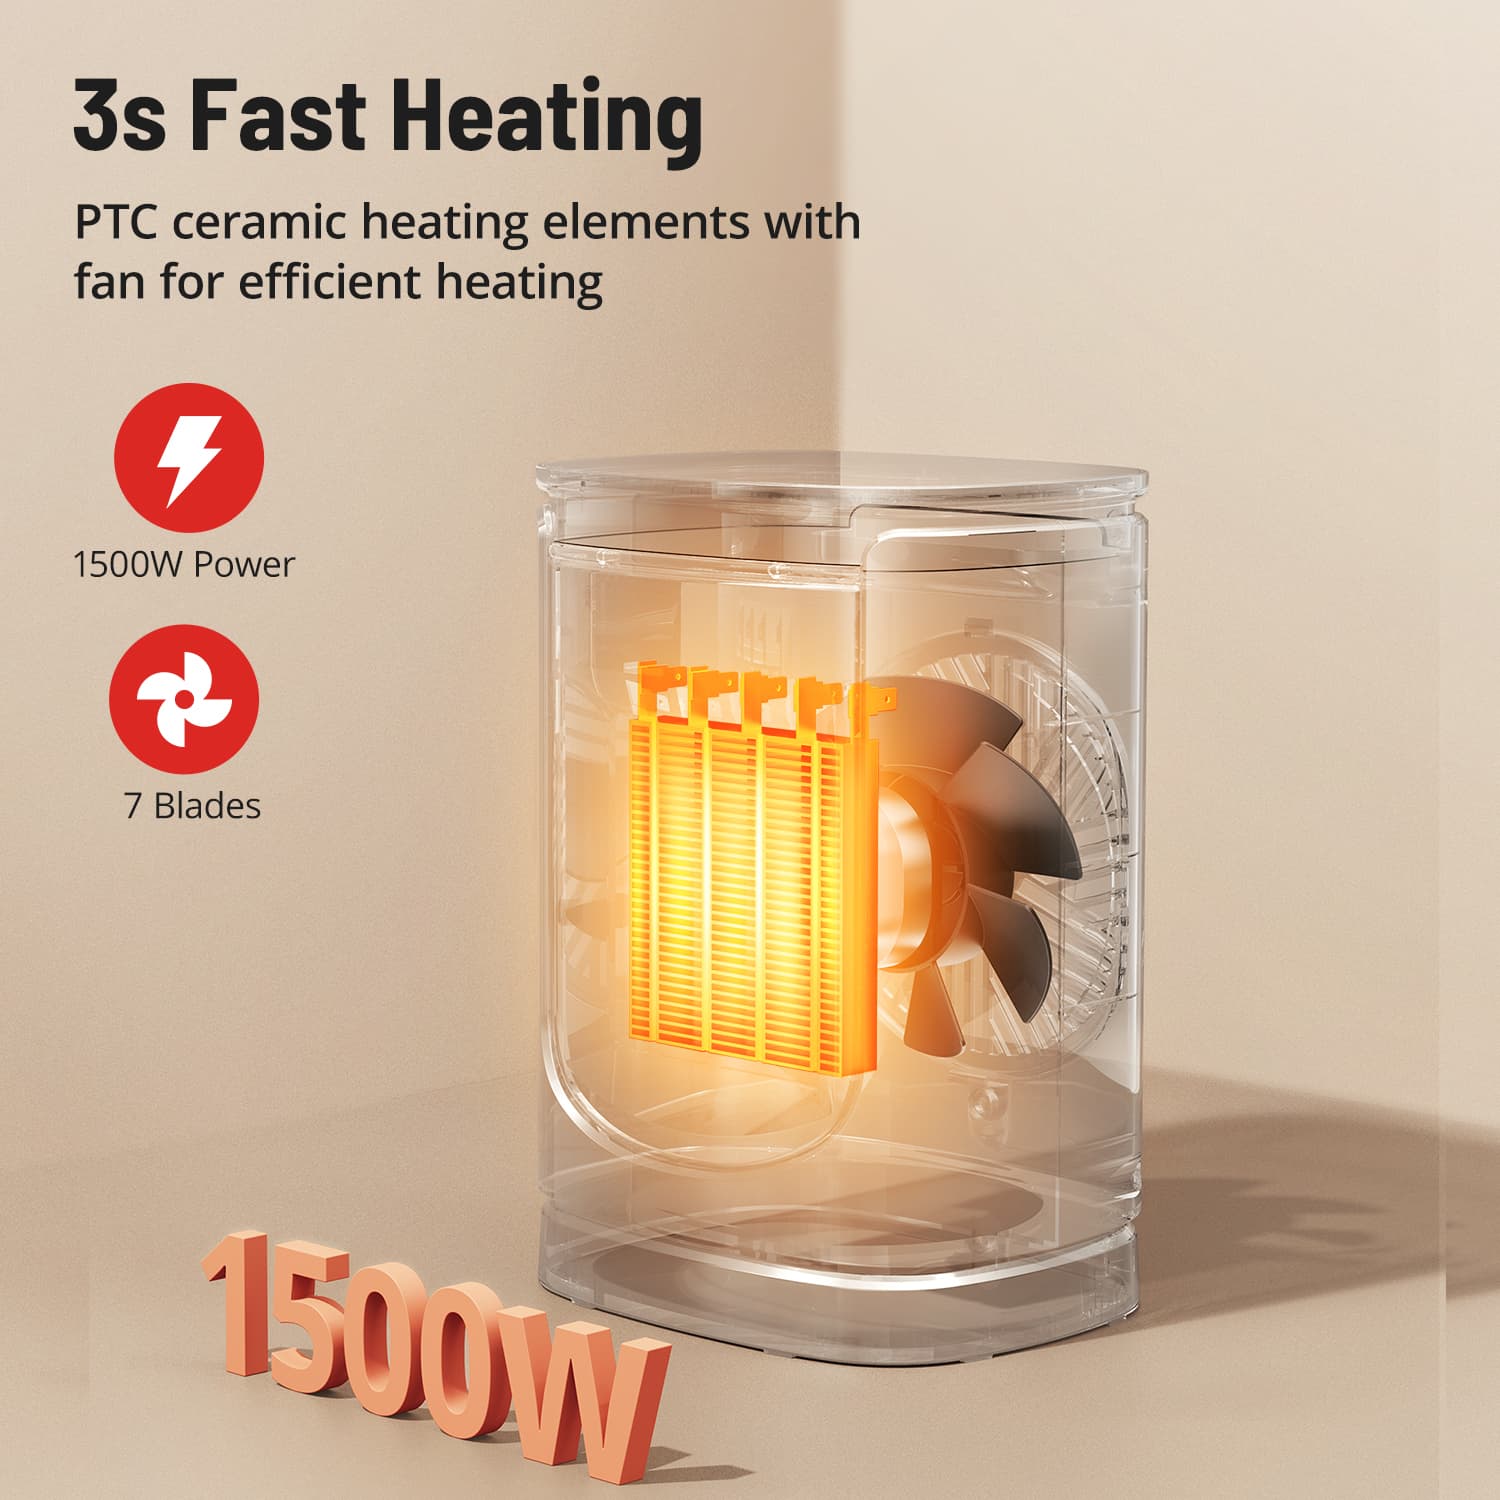 Paris Rhône Space Heater HE010, 1500W Fast Heating Portable Heater-Space Heaters-ParisRhone